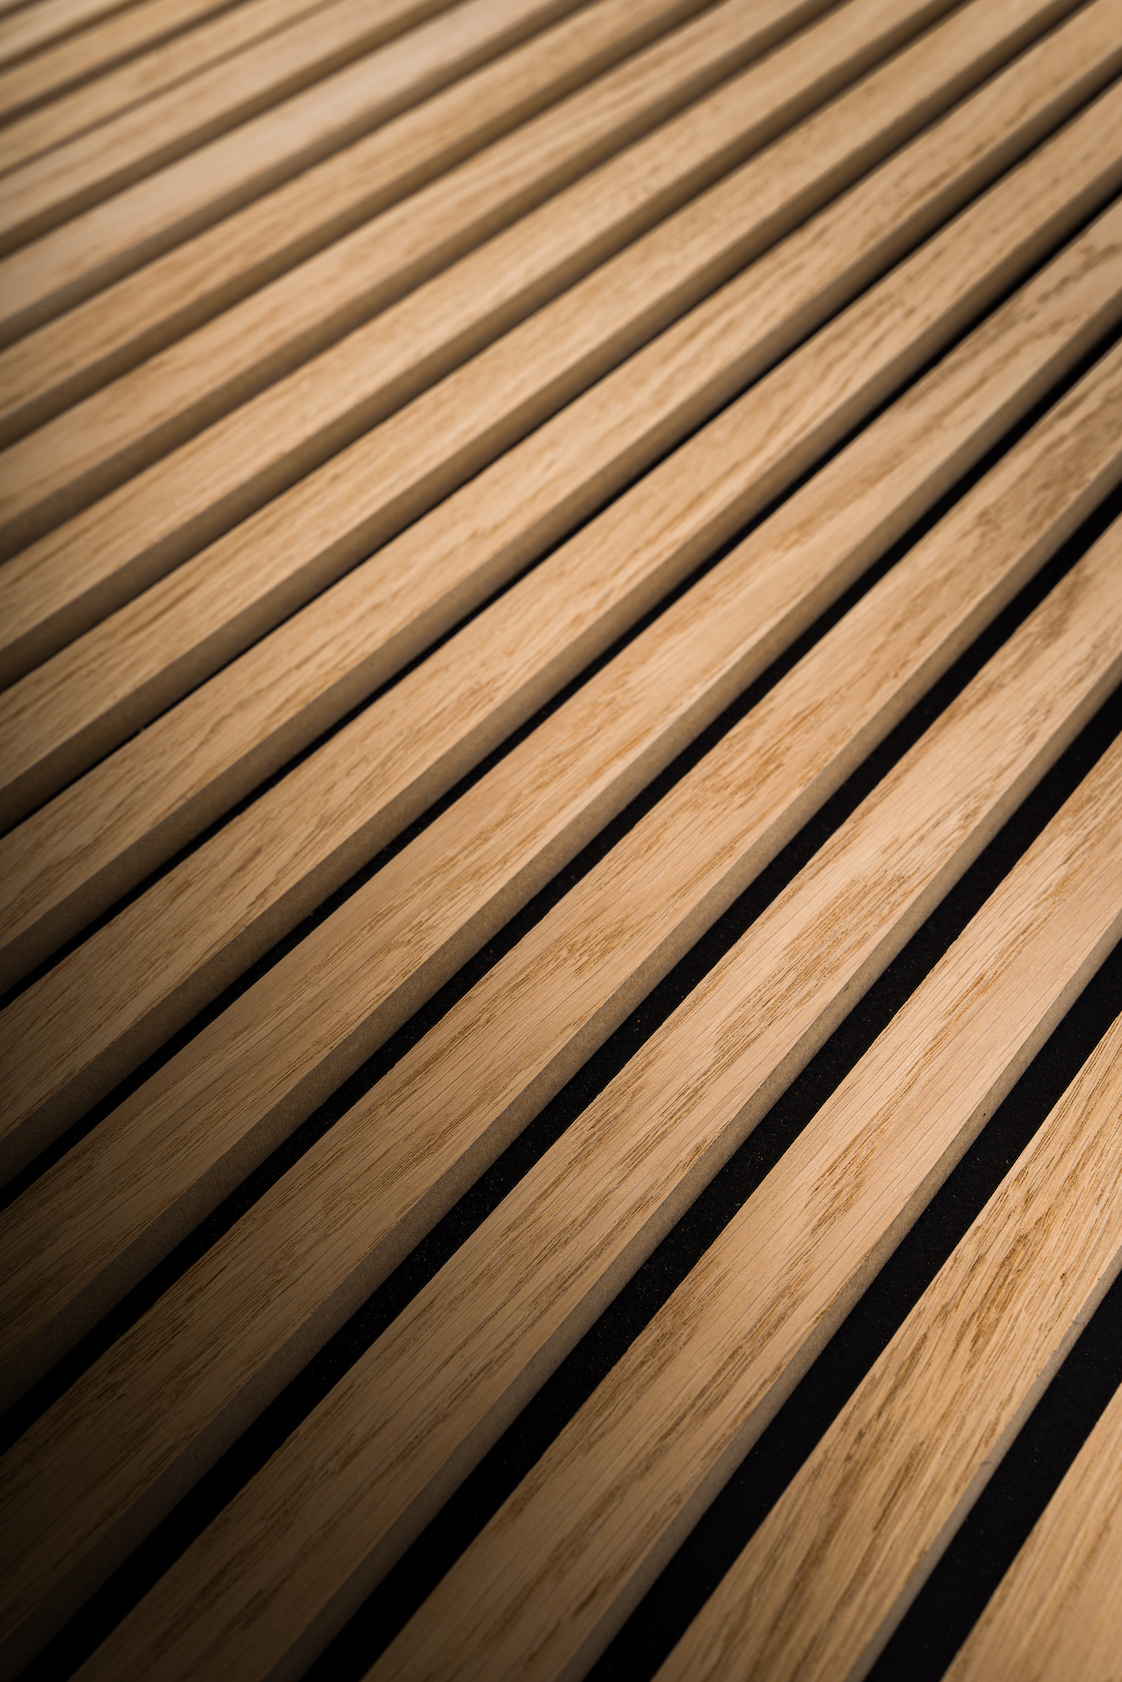 How to distinguish good wood acoustic panels?